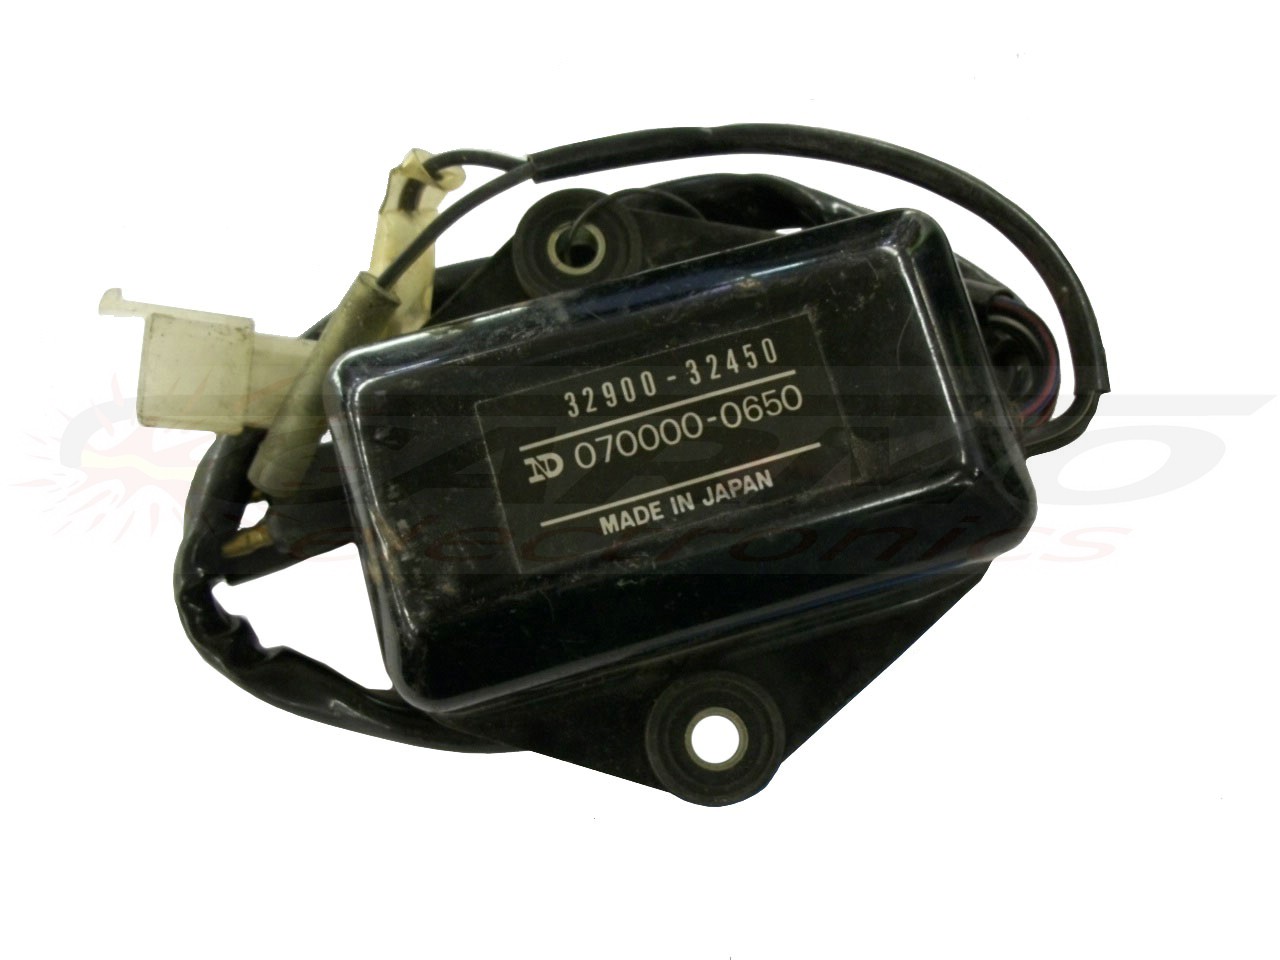 GN400 SP400 igniter ignition module CDI TCI Box (32900-32450, 070000-0650)